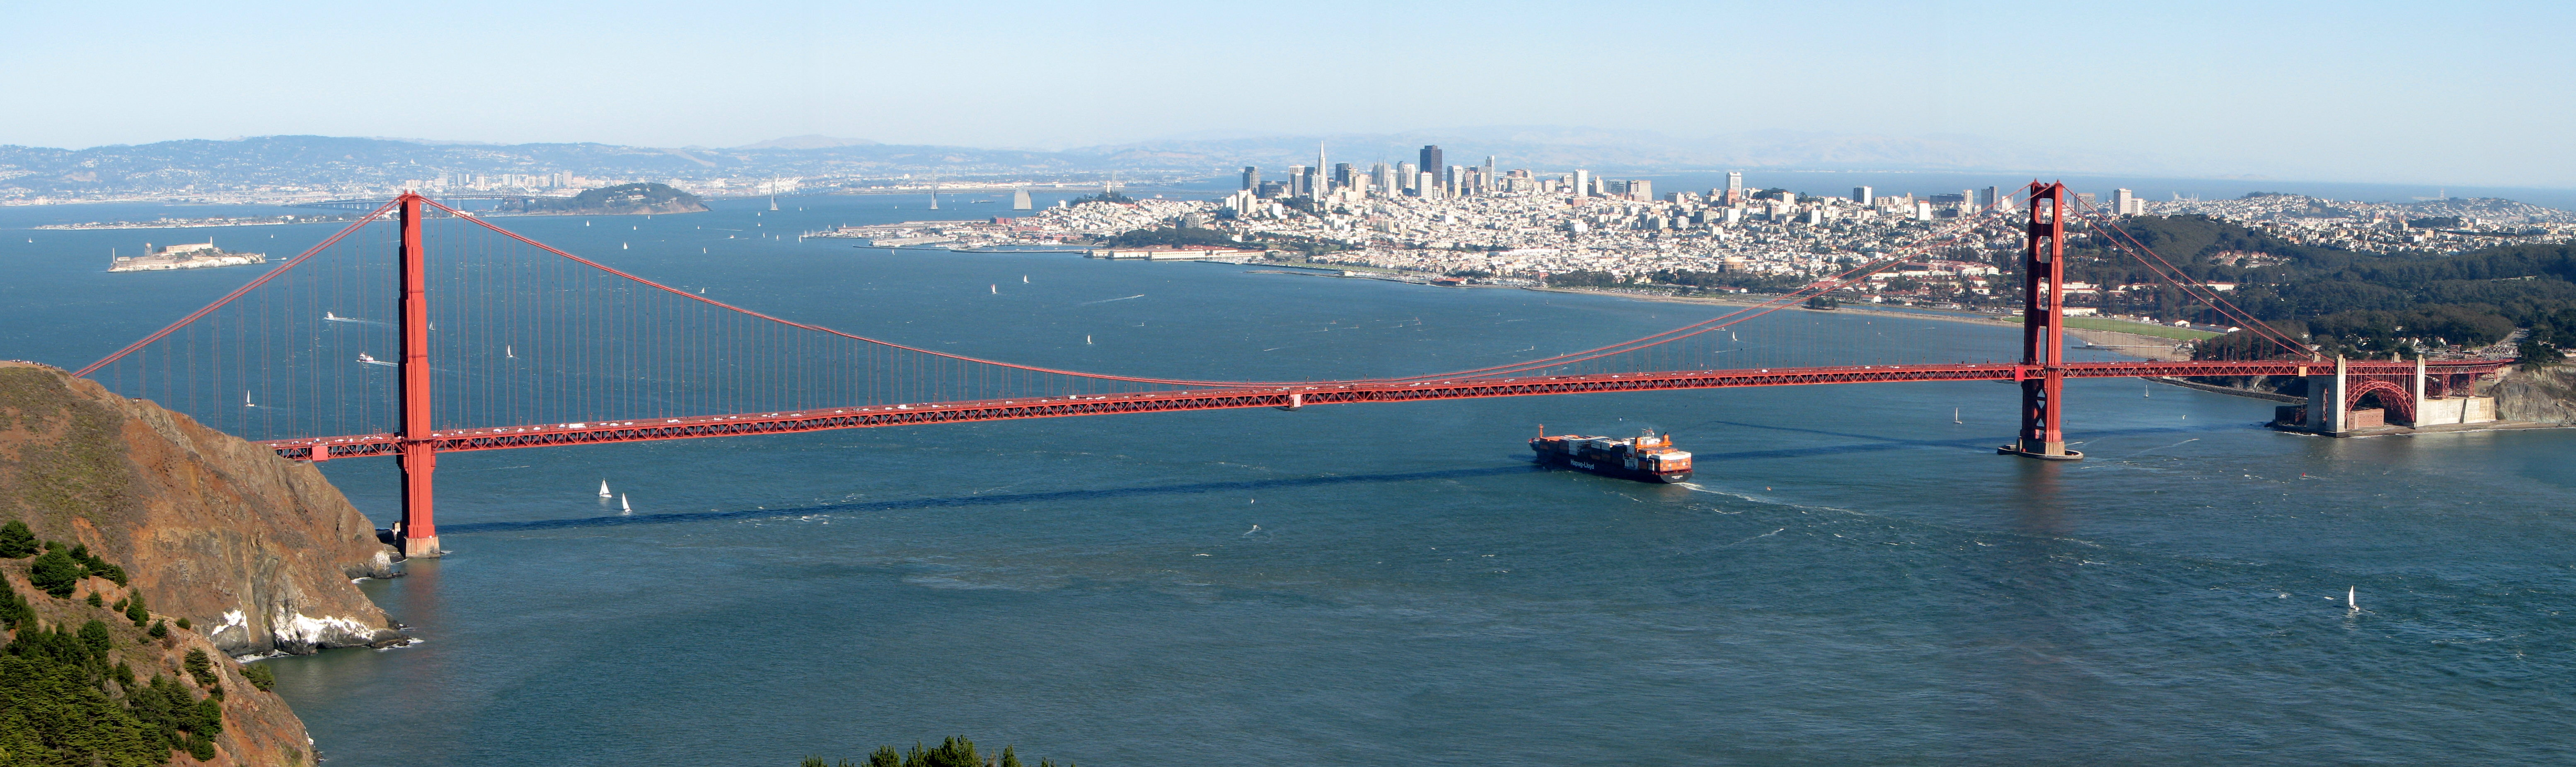 File:Golden Gate Bridge, SF.jpg - Wikimedia Commons